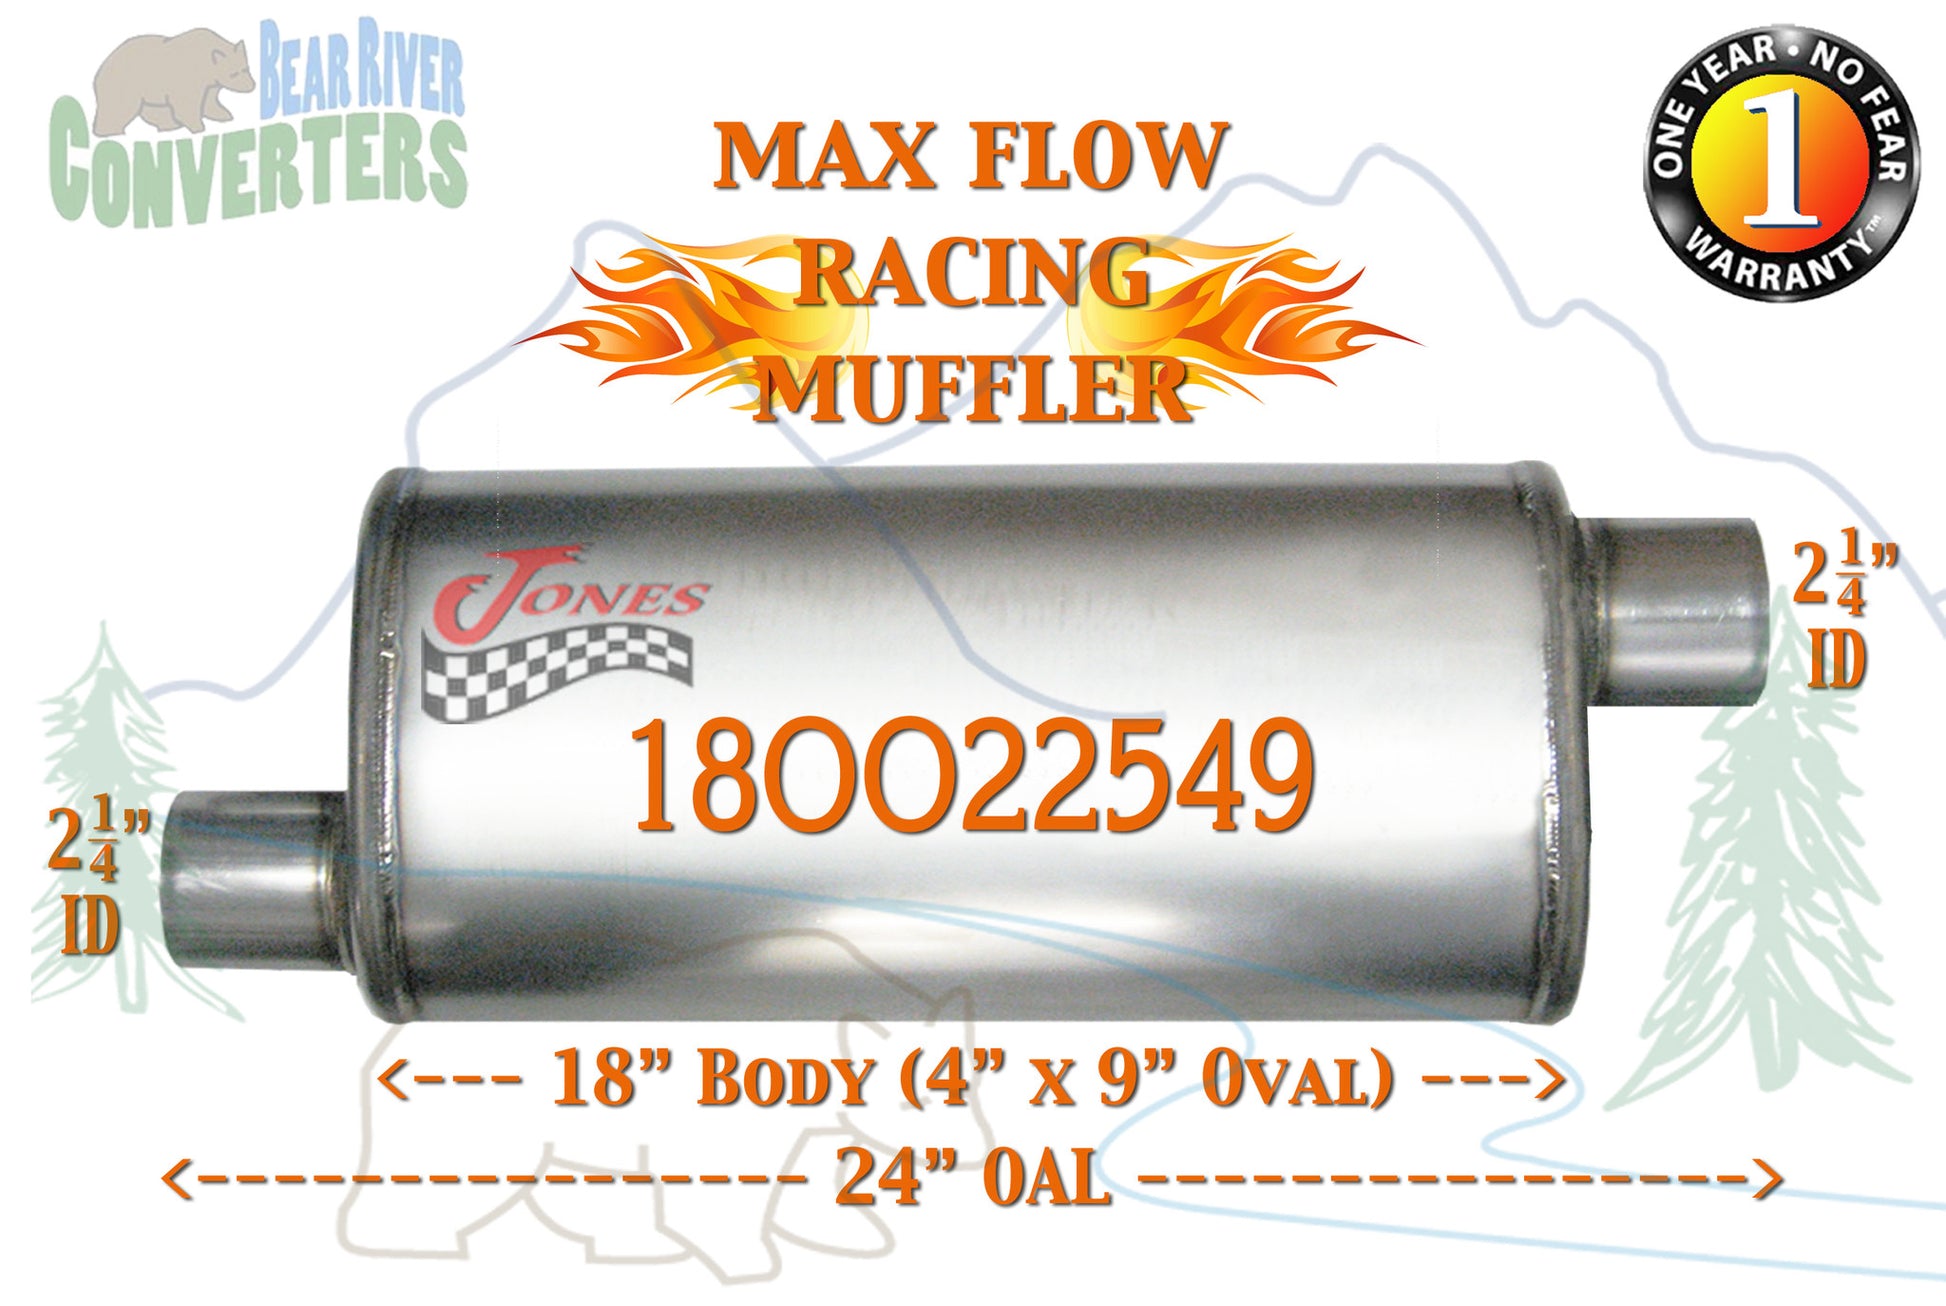 18OO22549 Jones MF1265 Max Flow Racing Muffler 18” Oval Body 2 1/4” 2.25” Pipe Offset/Offset 24” OAL - Bear River Converters